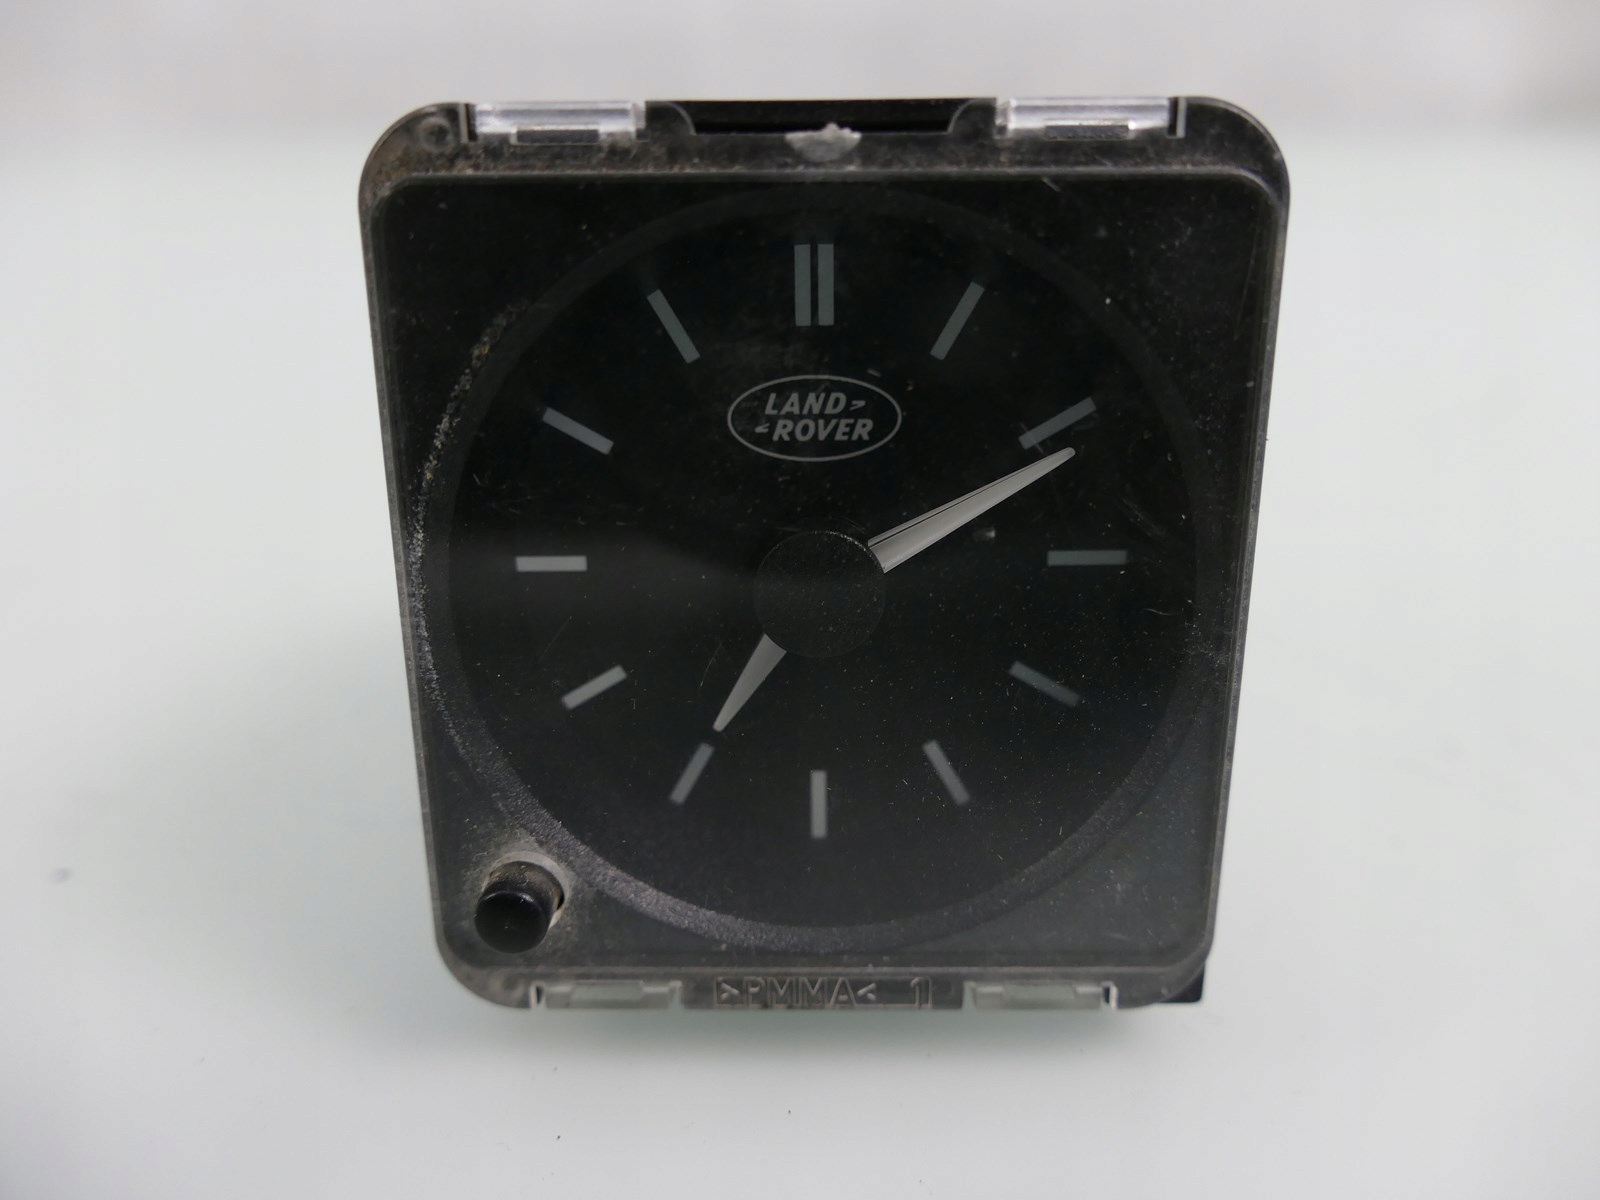 Land rover часы оригинальный yfb100410